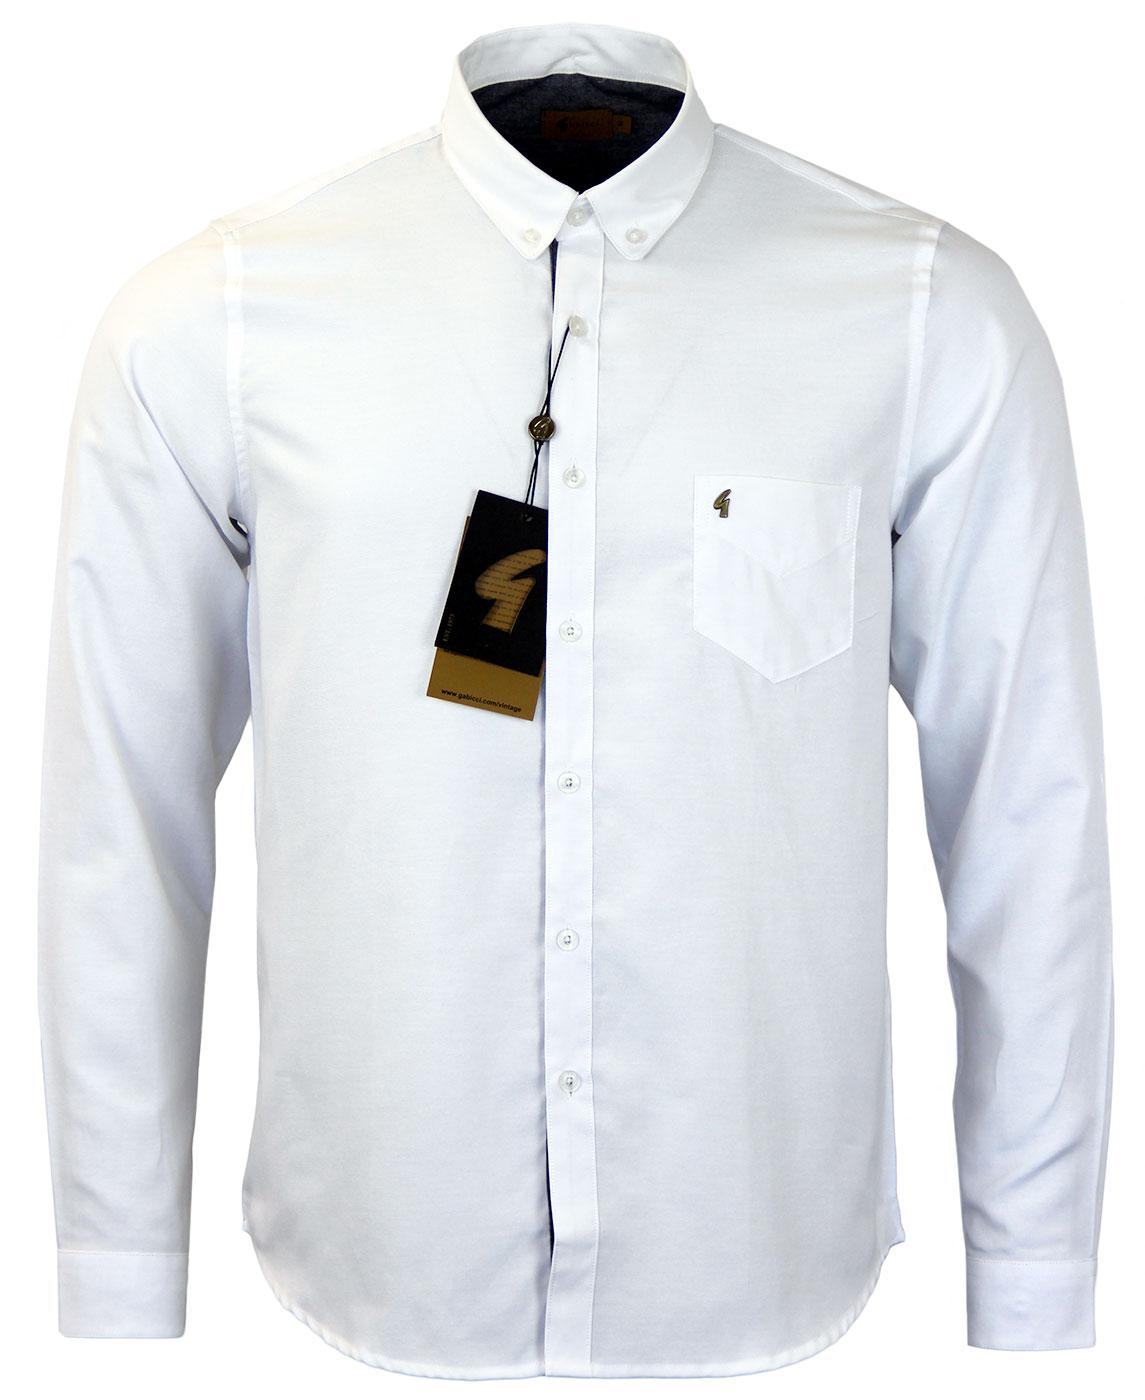 GABICCI VINTAGE Mod Rounded Collar Oxford Shirt W